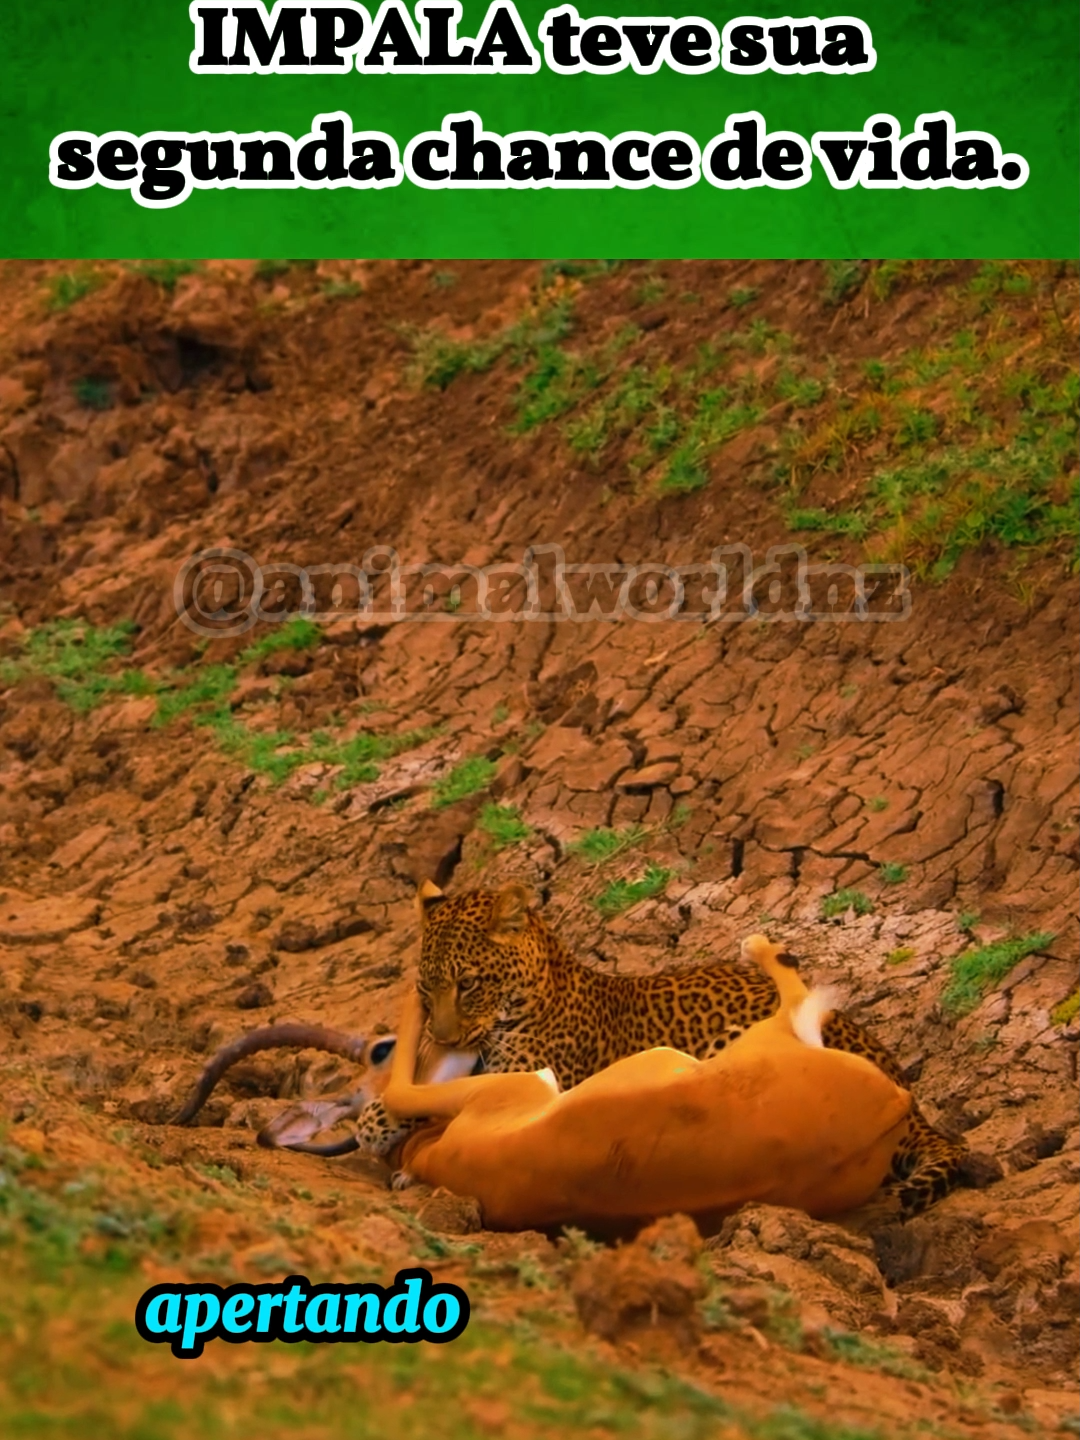 Leopardo vs Impala vs Hiena #animal #animalselvagem #animalplanet #leopardo #hiena #impala #animalworld #natureza #fauna #documentario #wildlife #wild